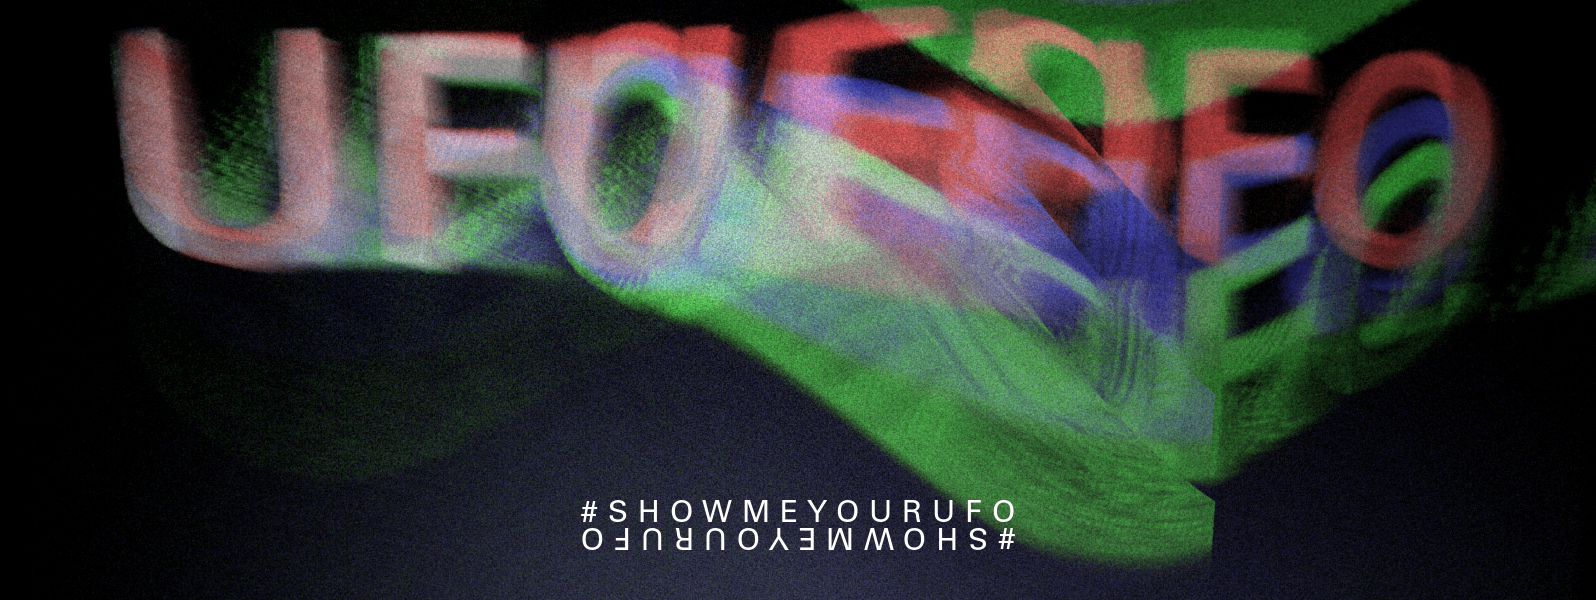 #SHOWMEYOURUFO banner / design by Rob Szynal